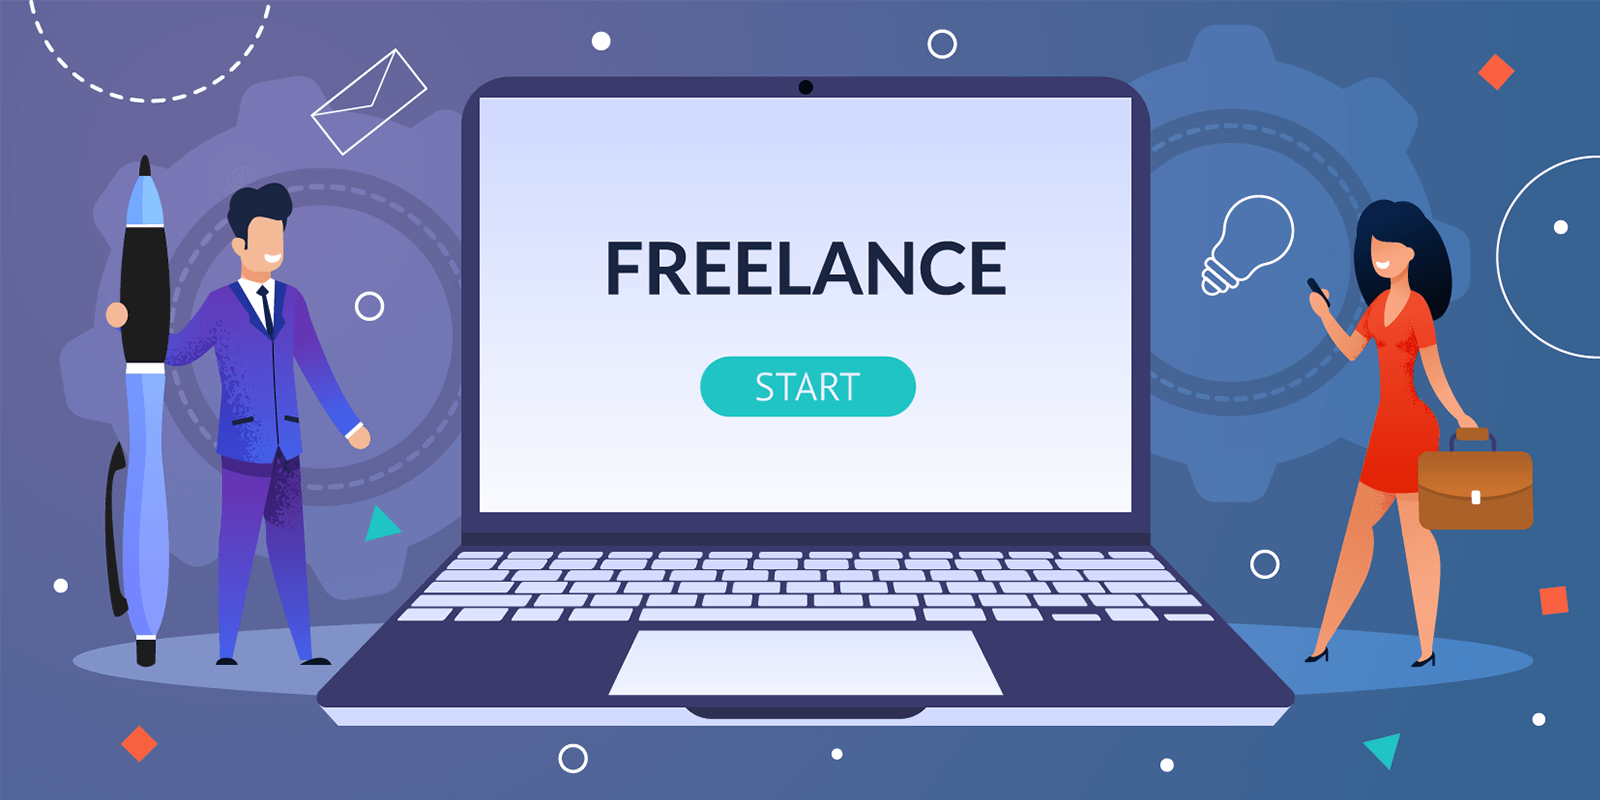 Pick up freelance work online